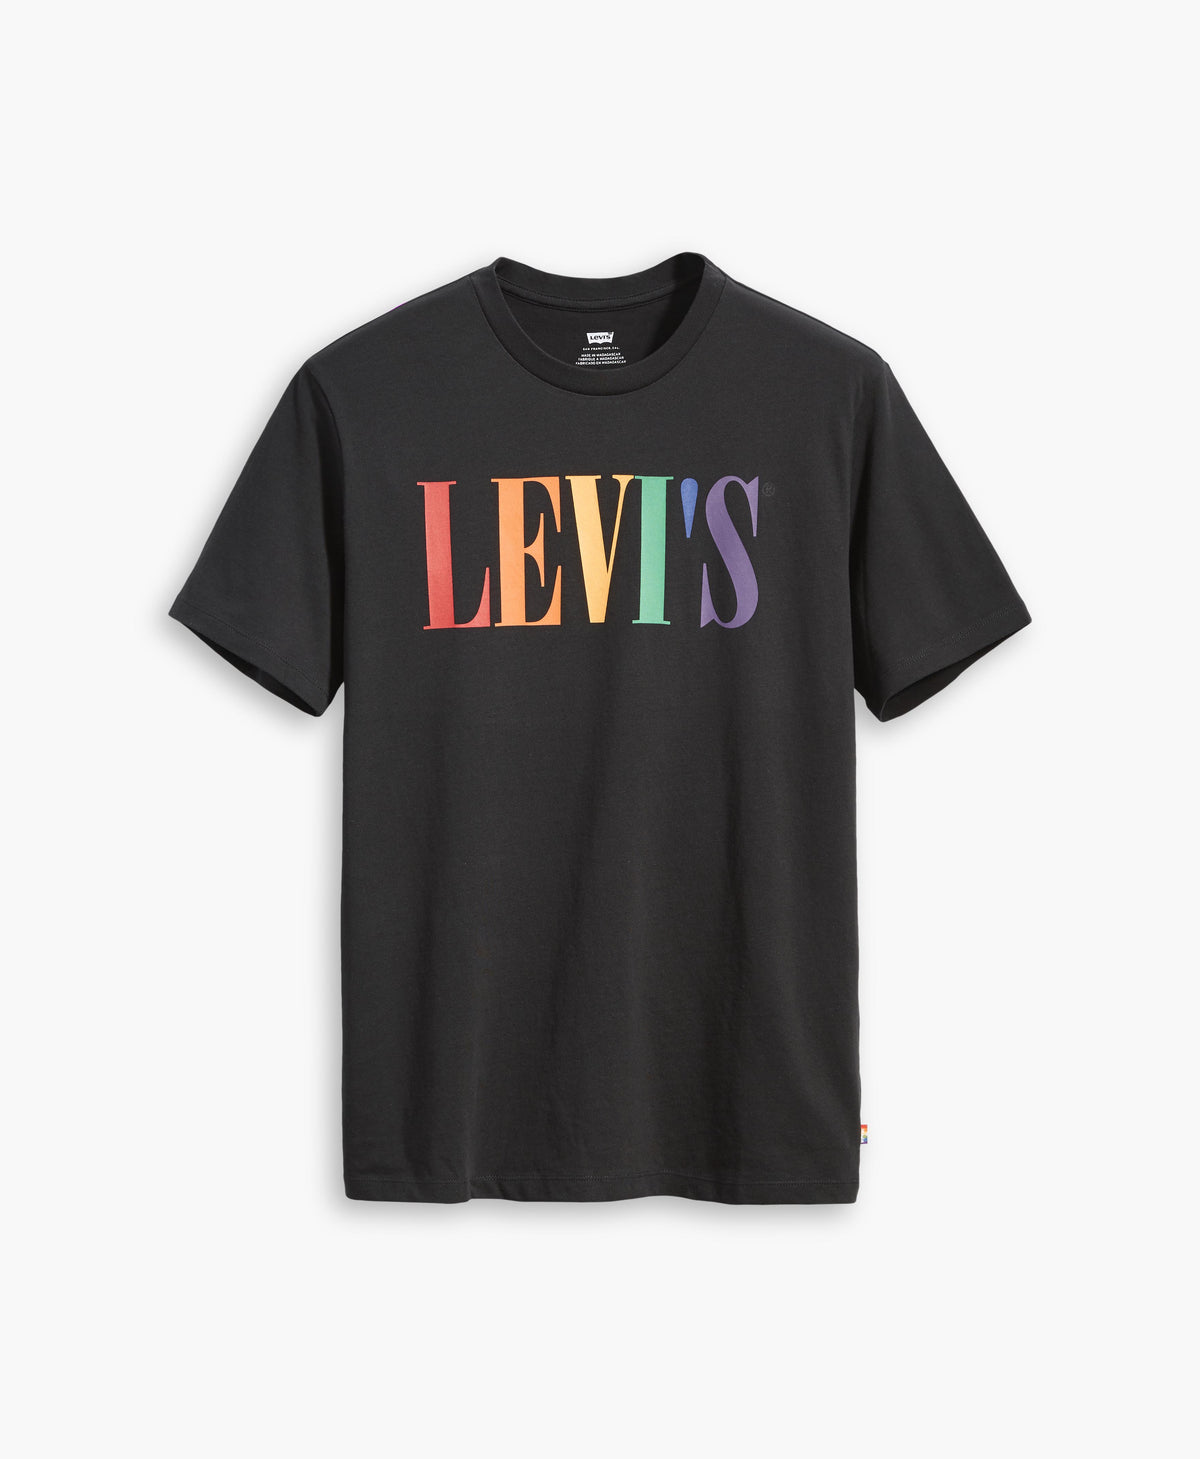 levi's pride t shirt uk